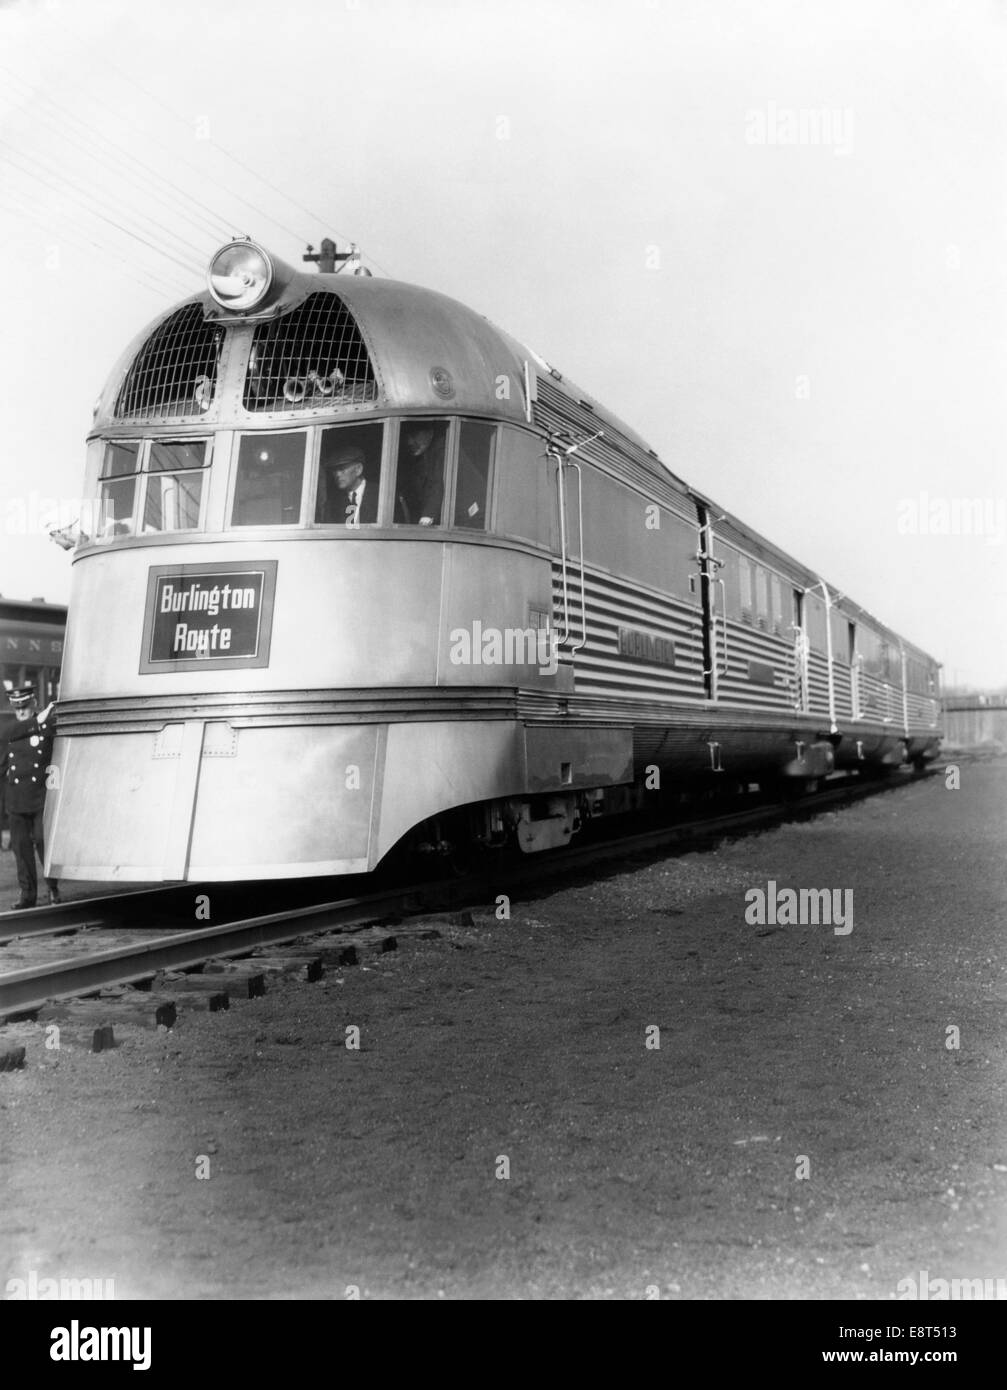 BURLINGTON ZEPHYR RAILROAD TRAIN EAST DUBUQUE ILLINOIS 8x10 SILVER HALIDE PHOTO 